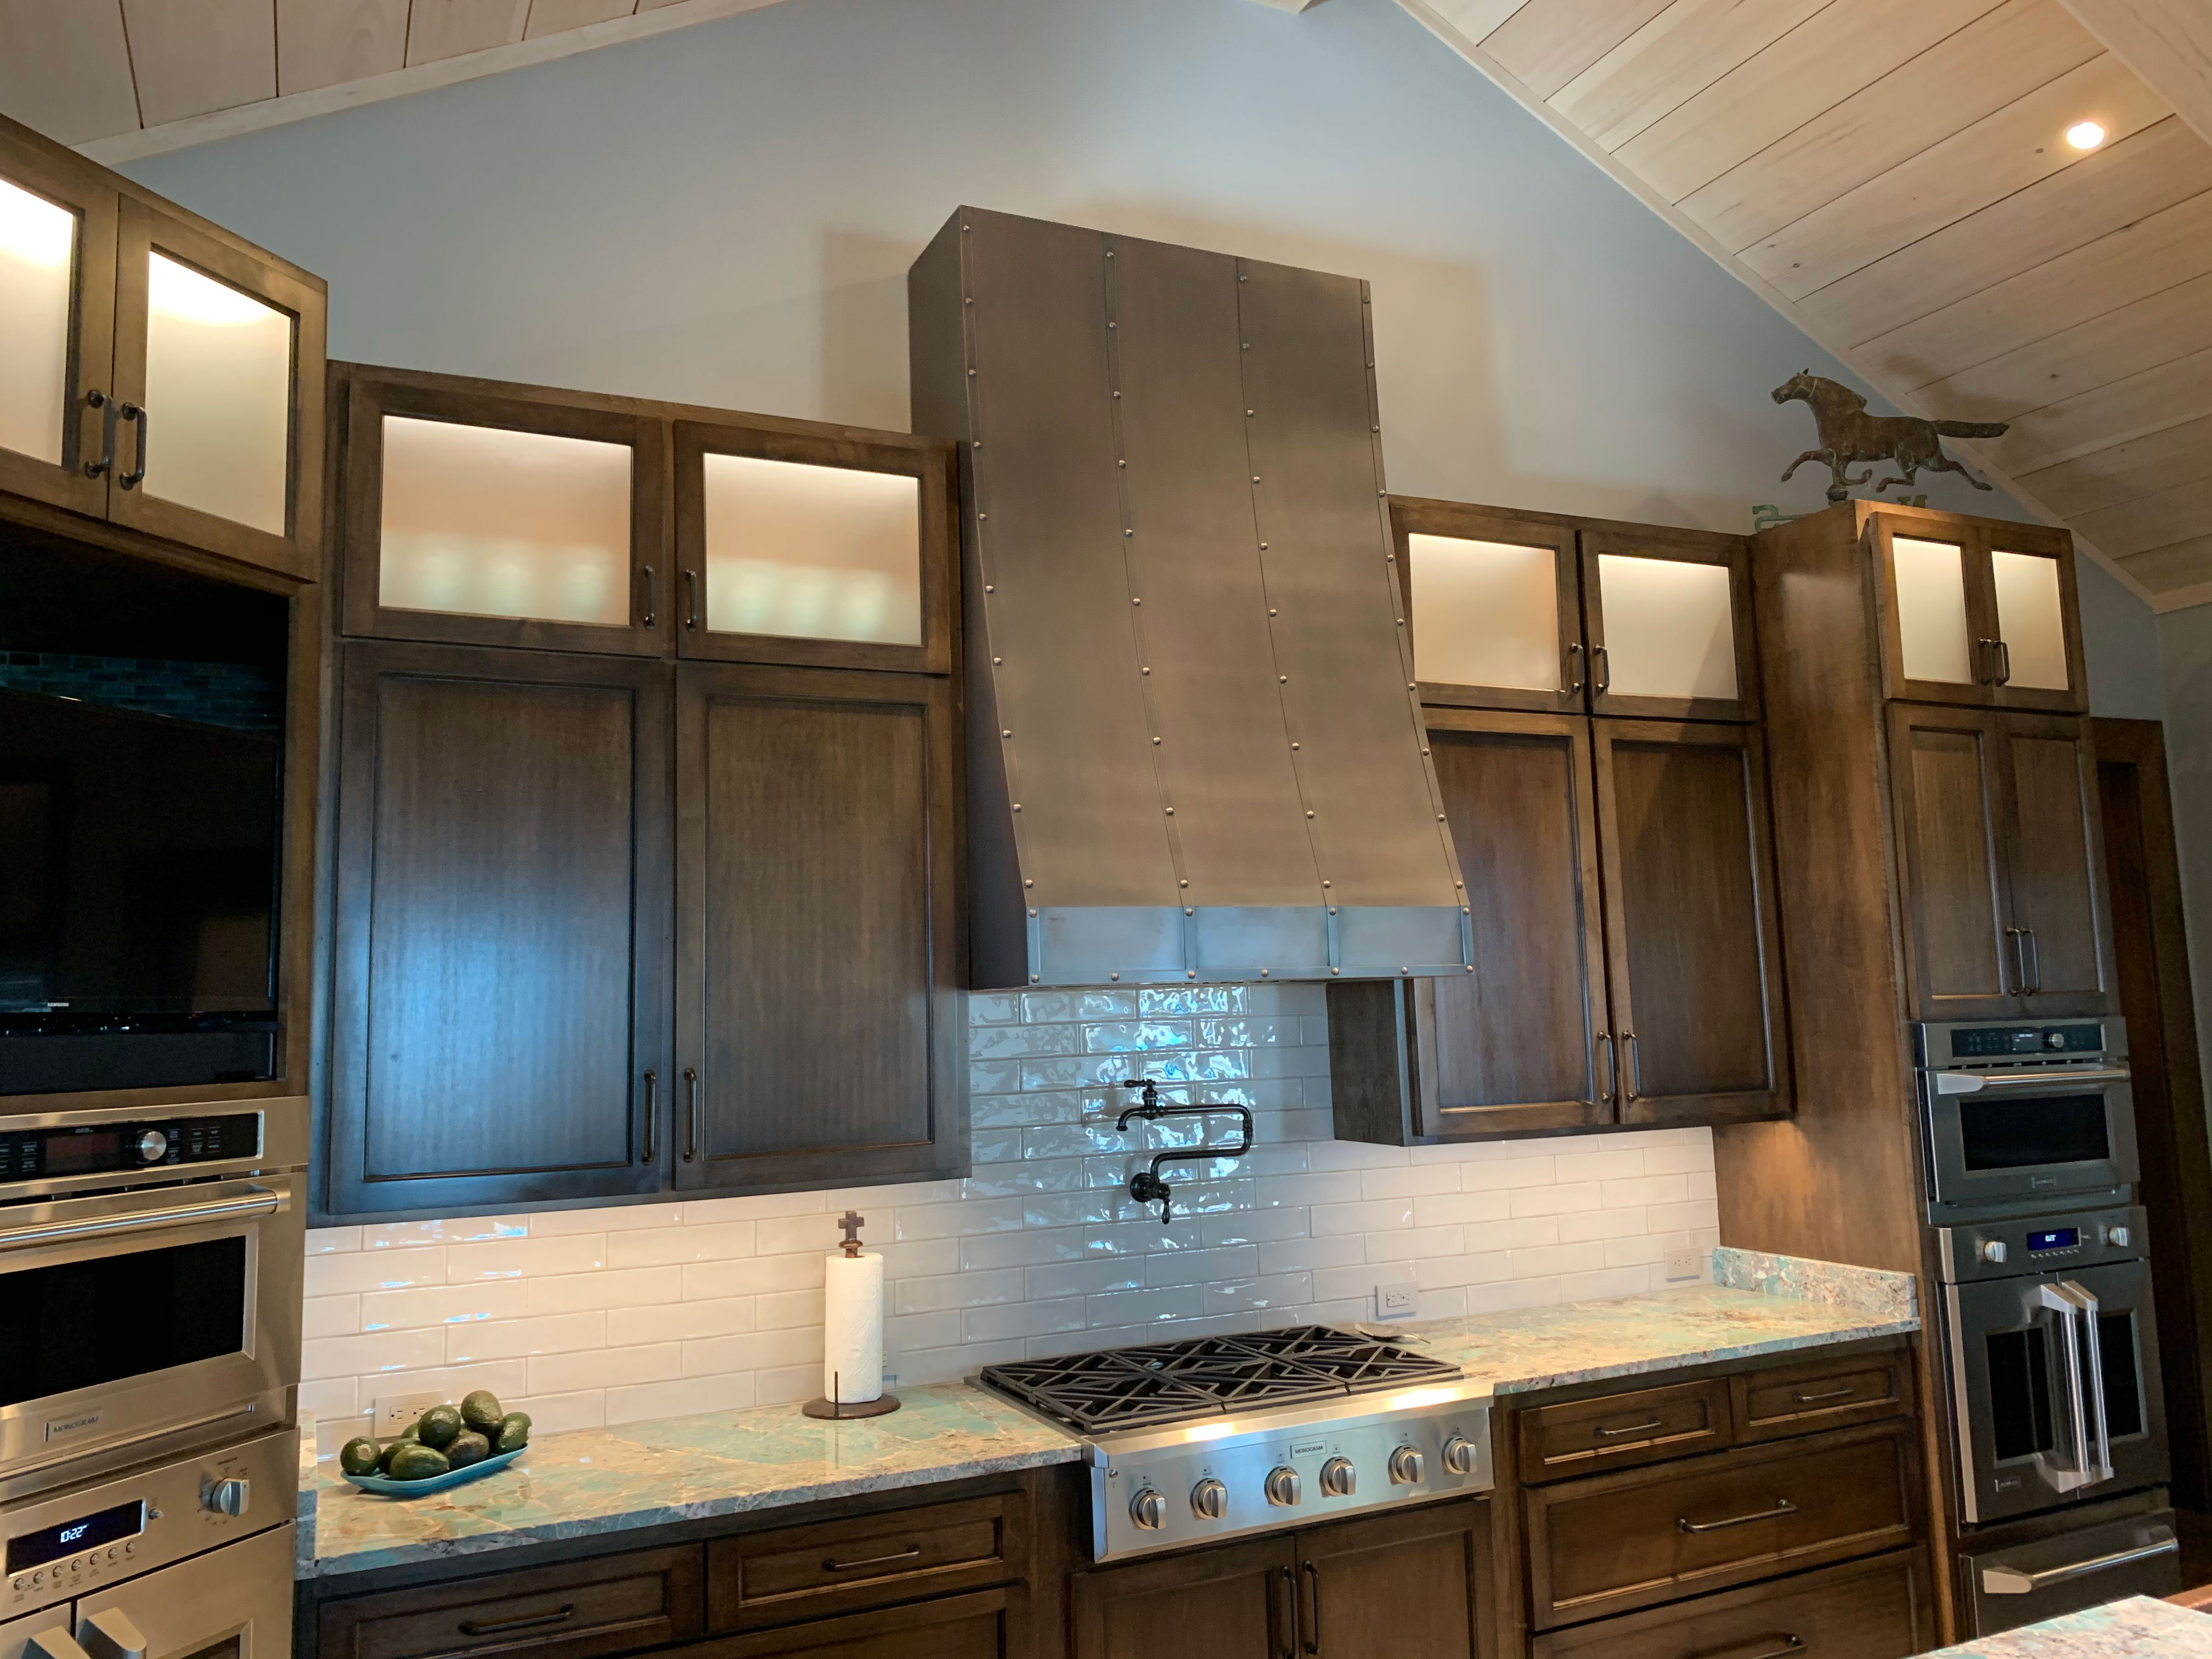 Kitchen design idea with copper range hood with brown cabinets, marble countertops, stylish brick backsplash